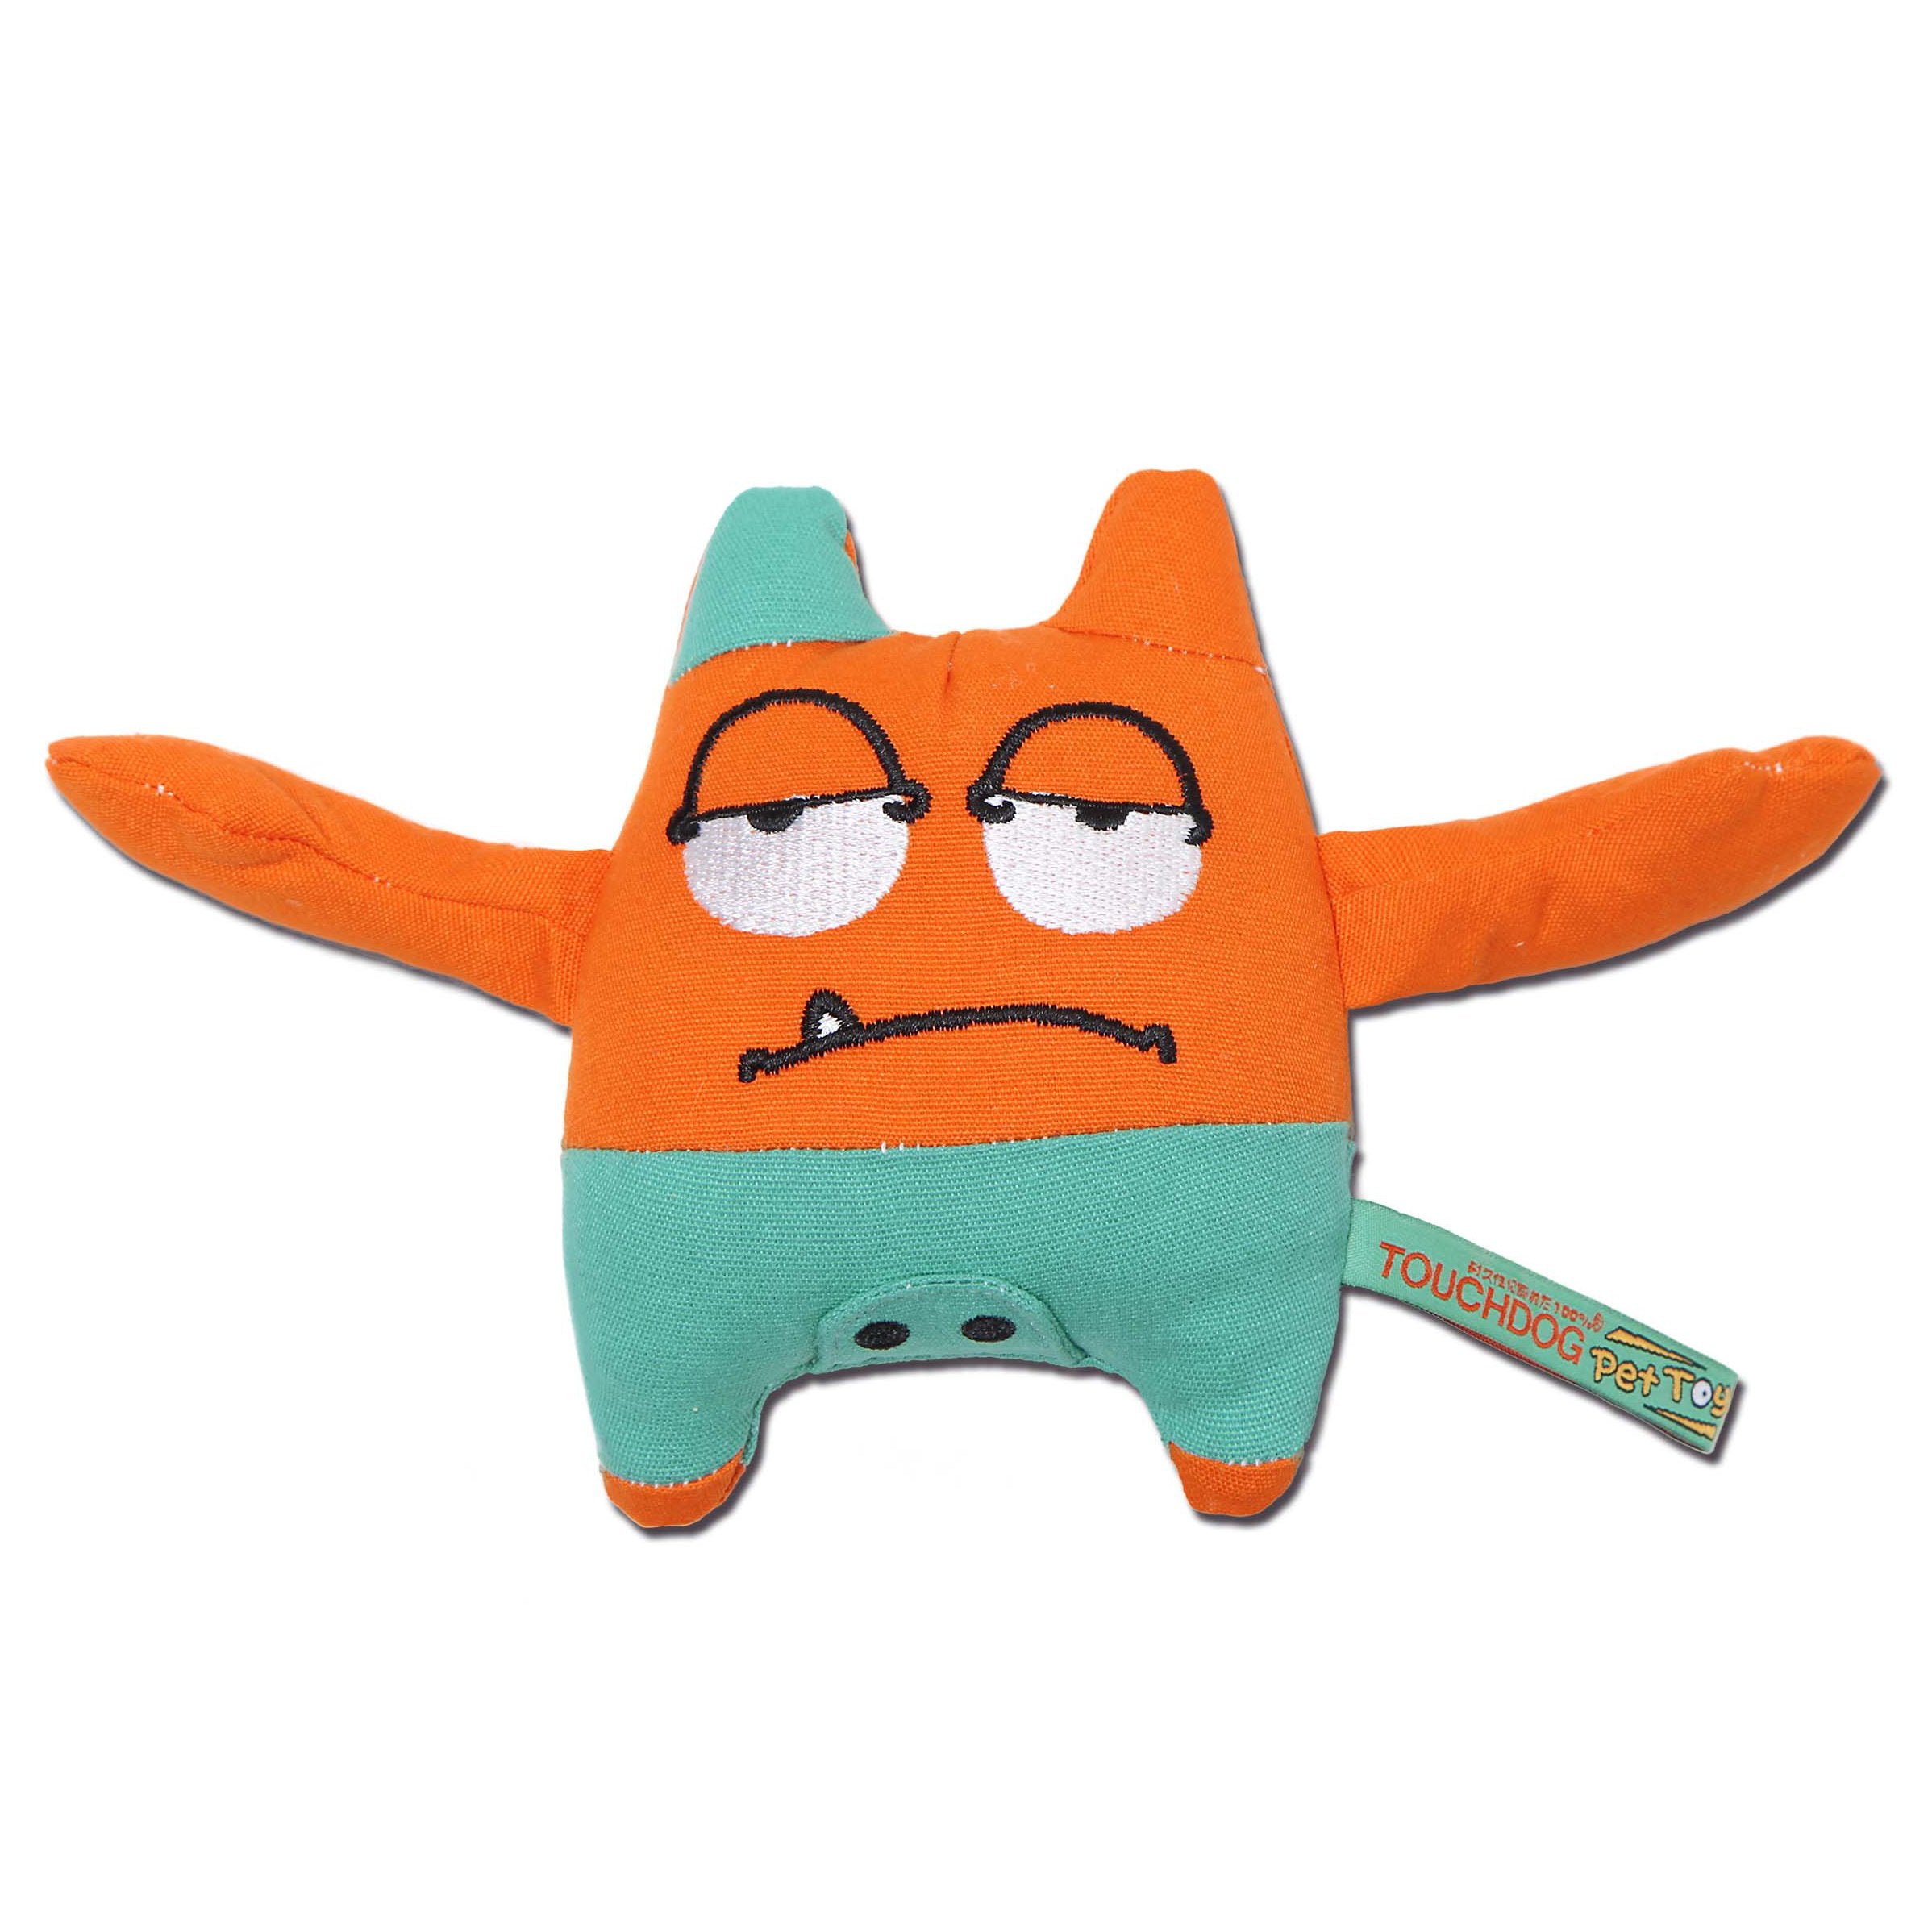 Touchdog Cartoon Sleepy Monster Plush Dog Toy - Orange